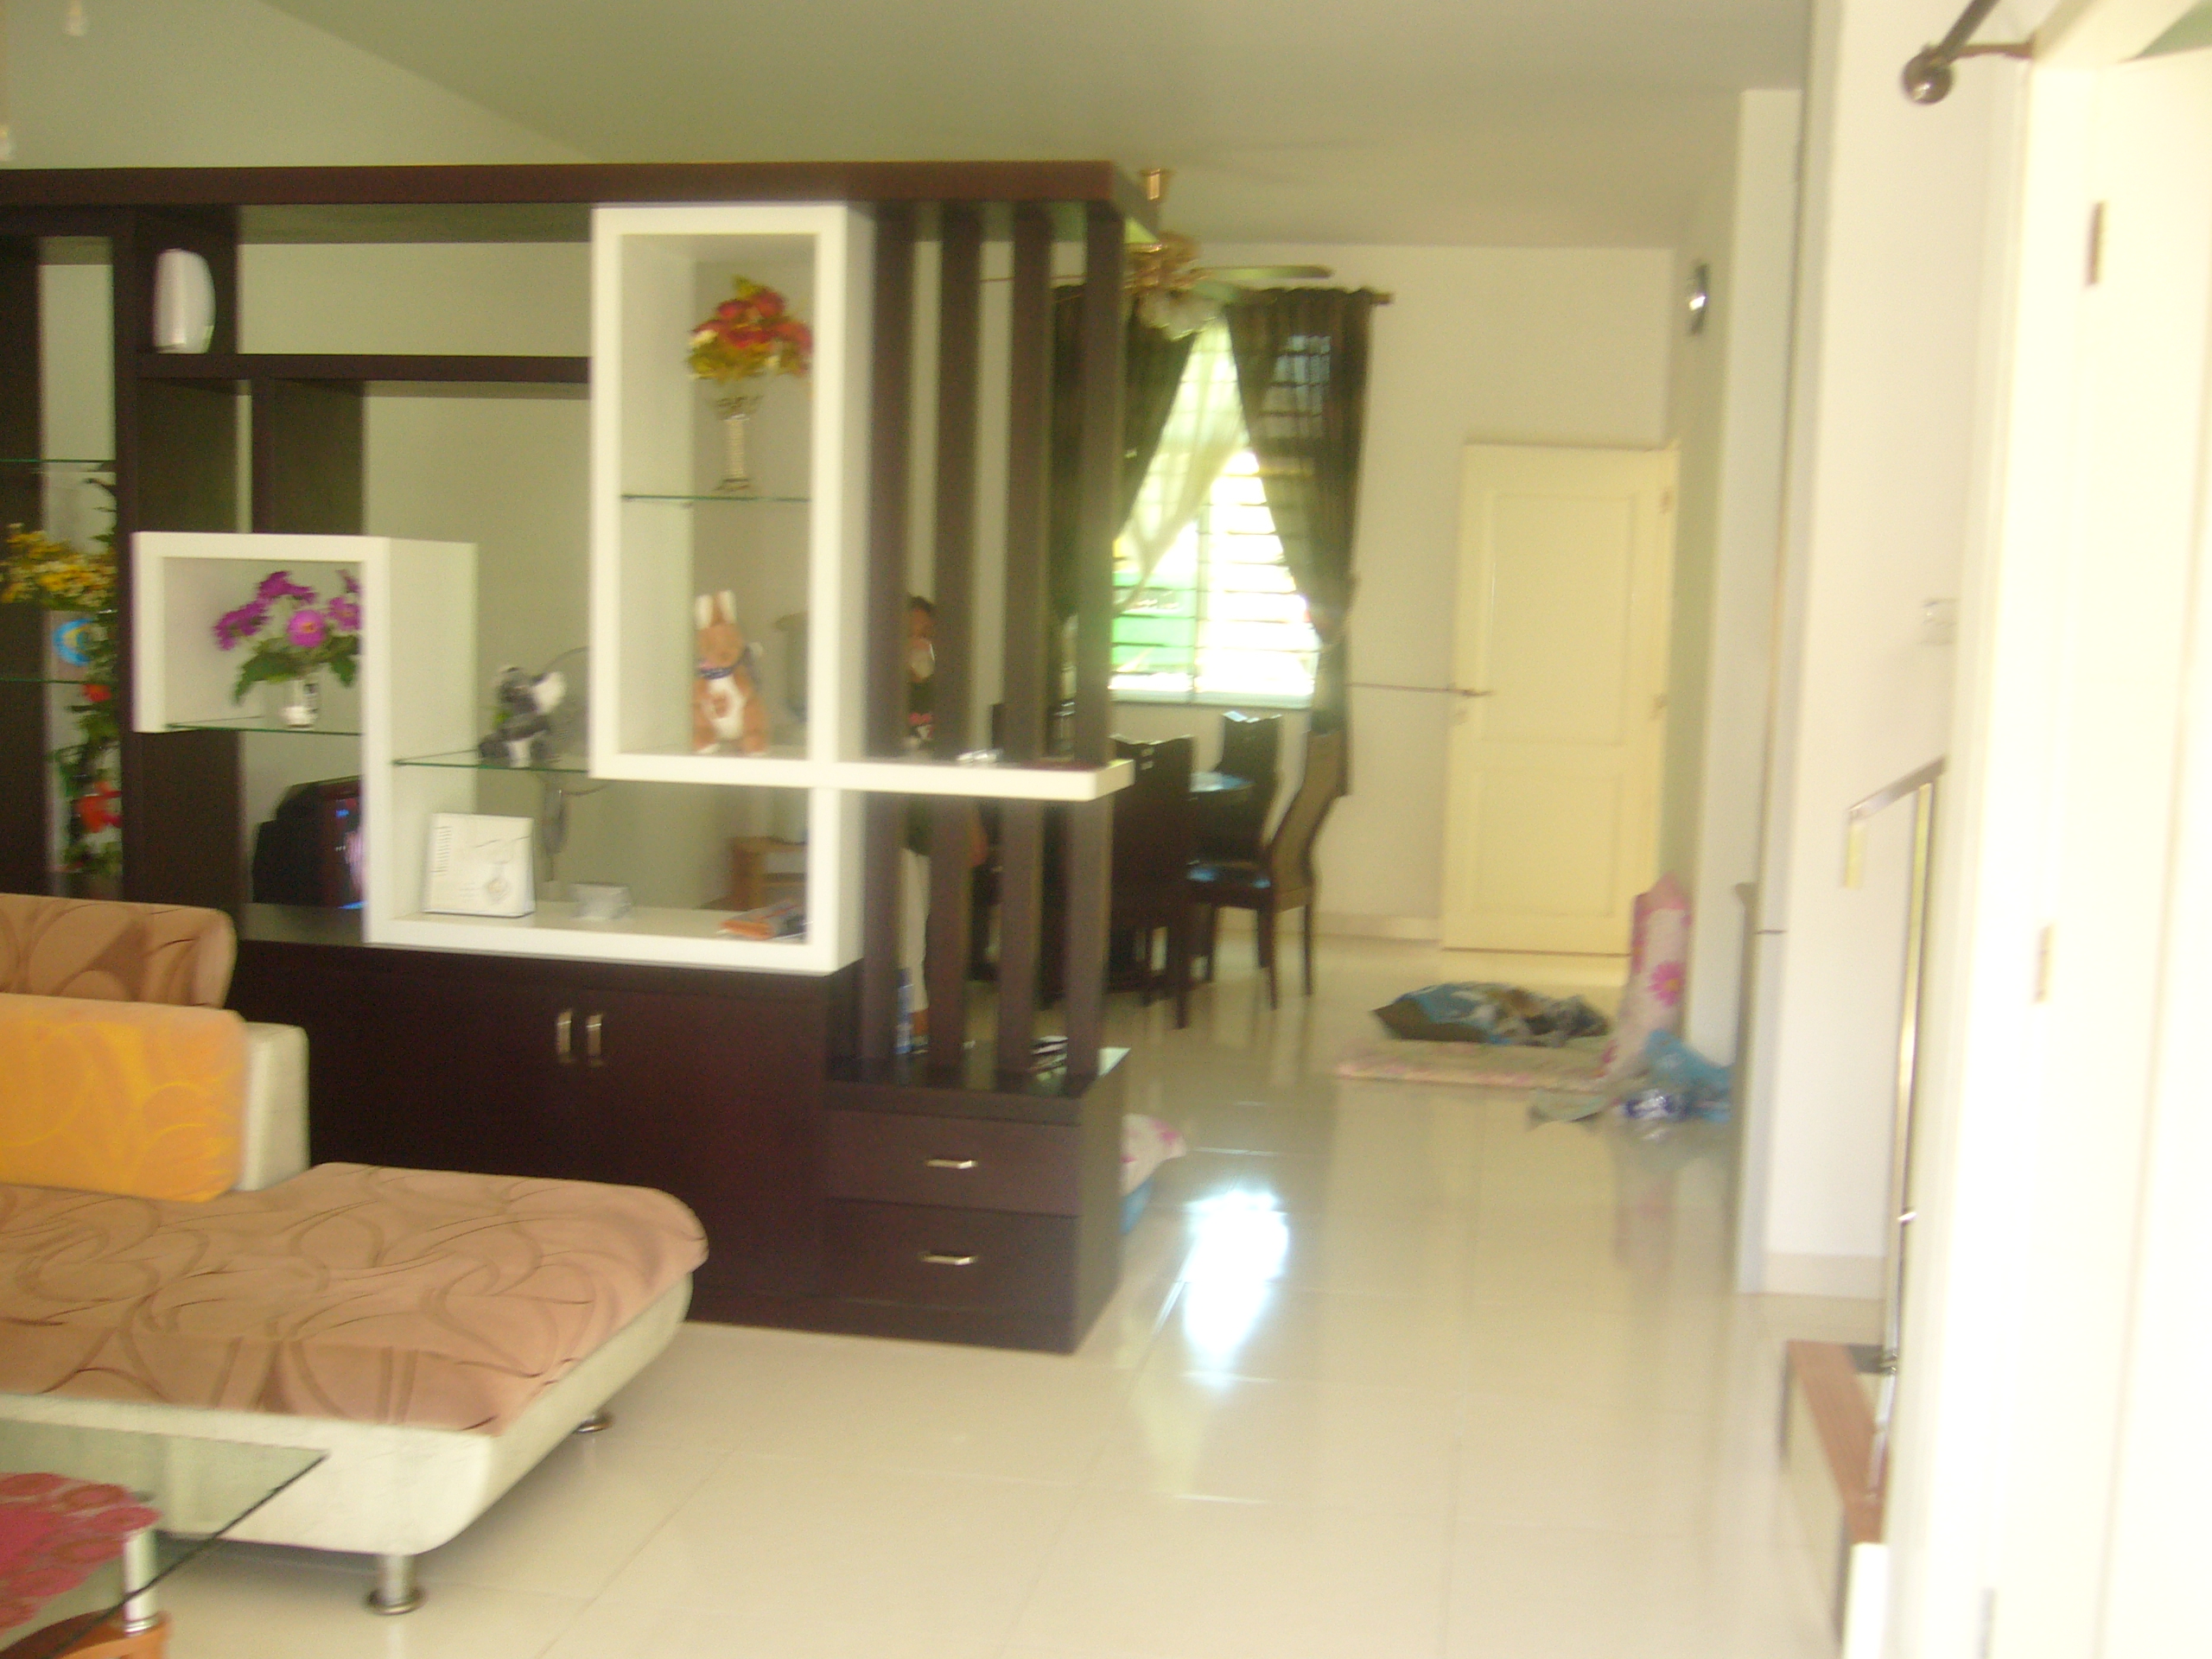 Jual Rumah Baru Minimalis Di Bandung Rumah Upin